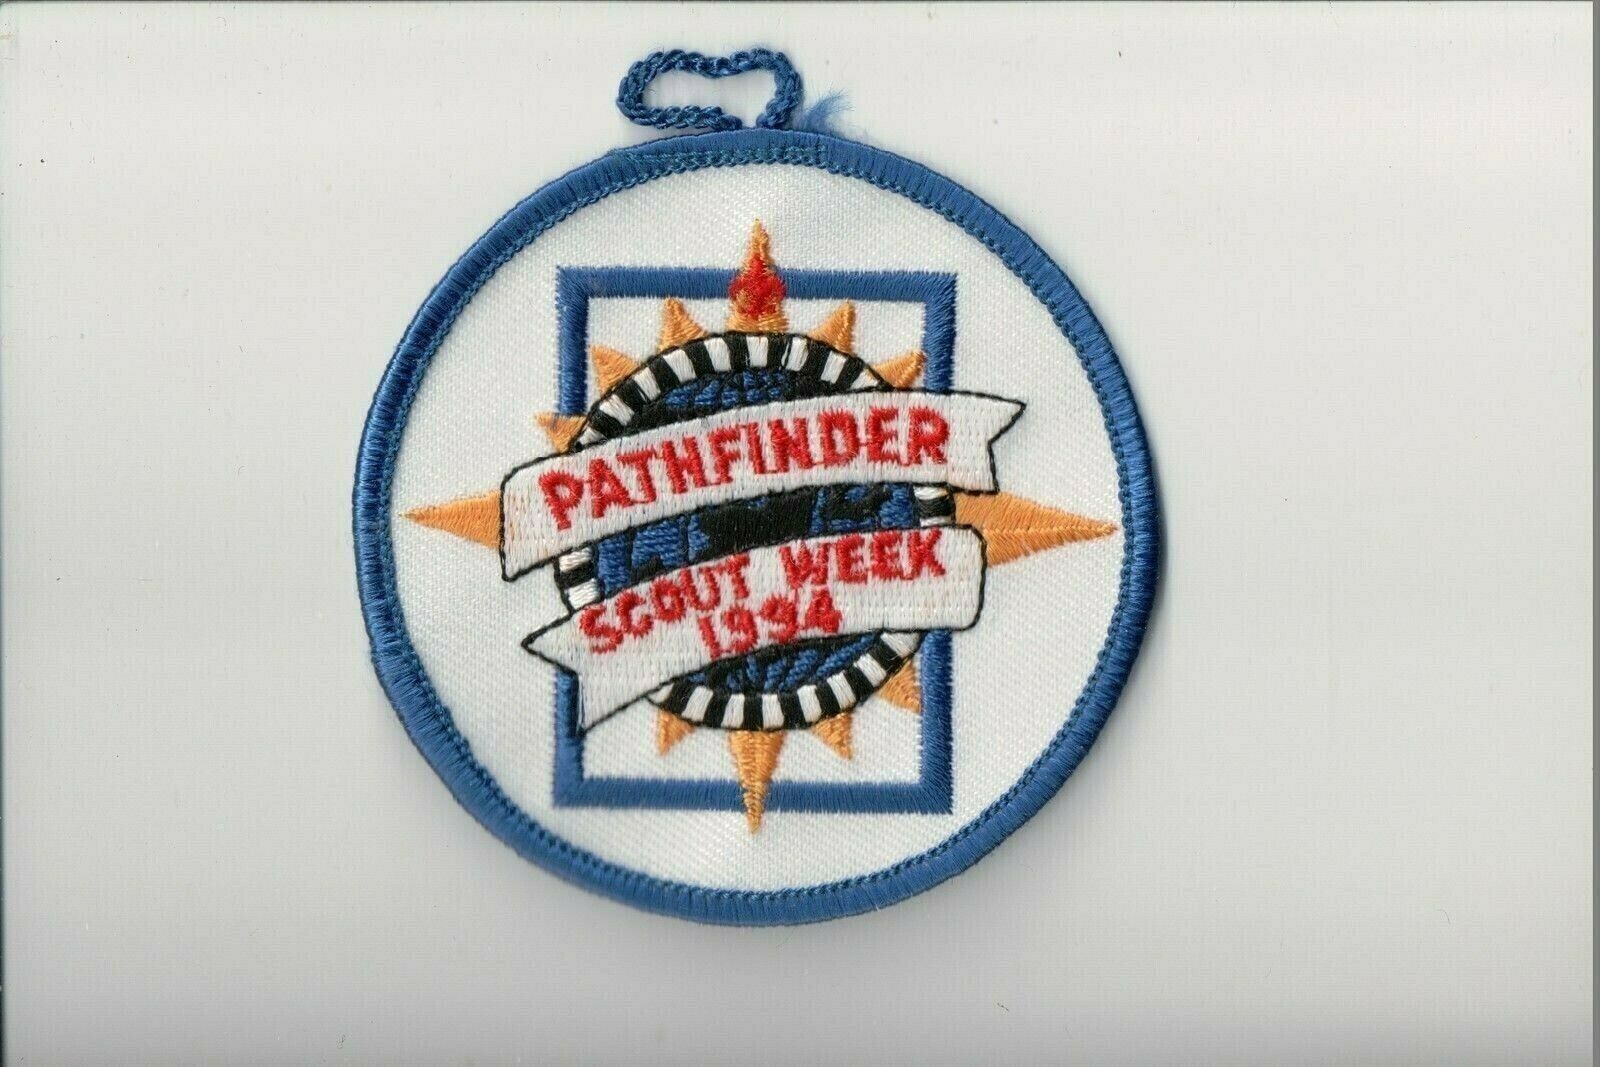 1994 Pathfinder Scout Week patch